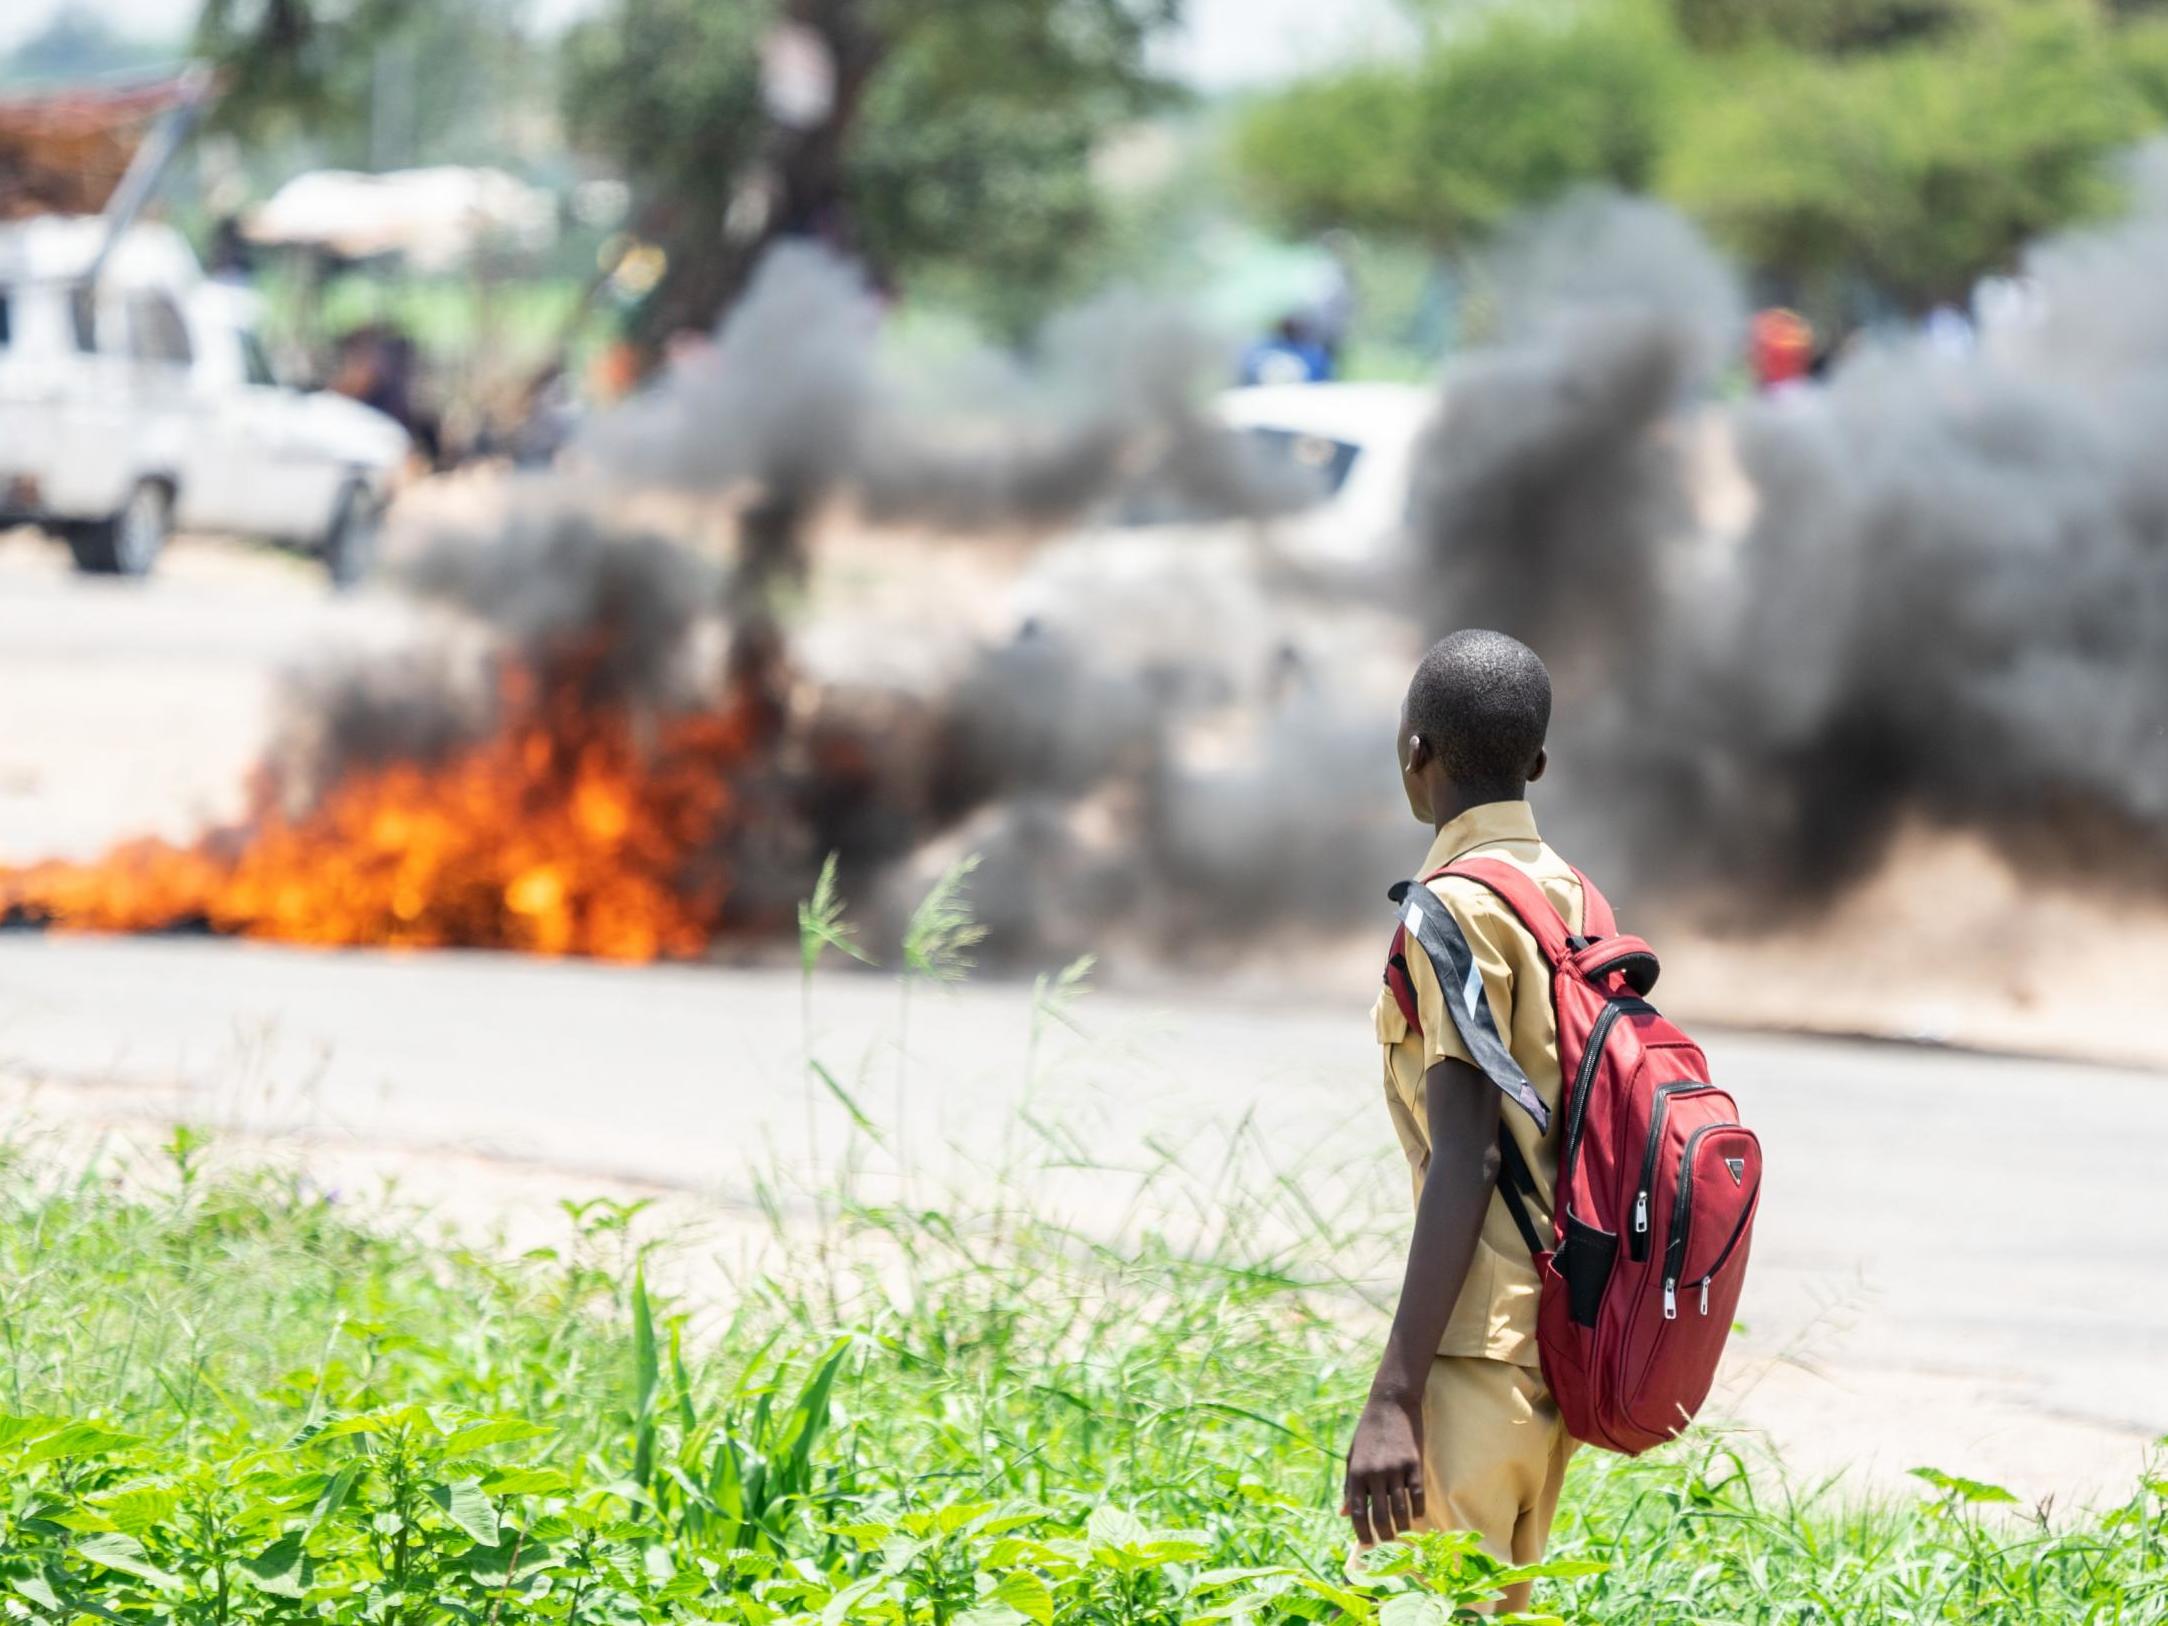 A schoolboy looks at a burning barricade